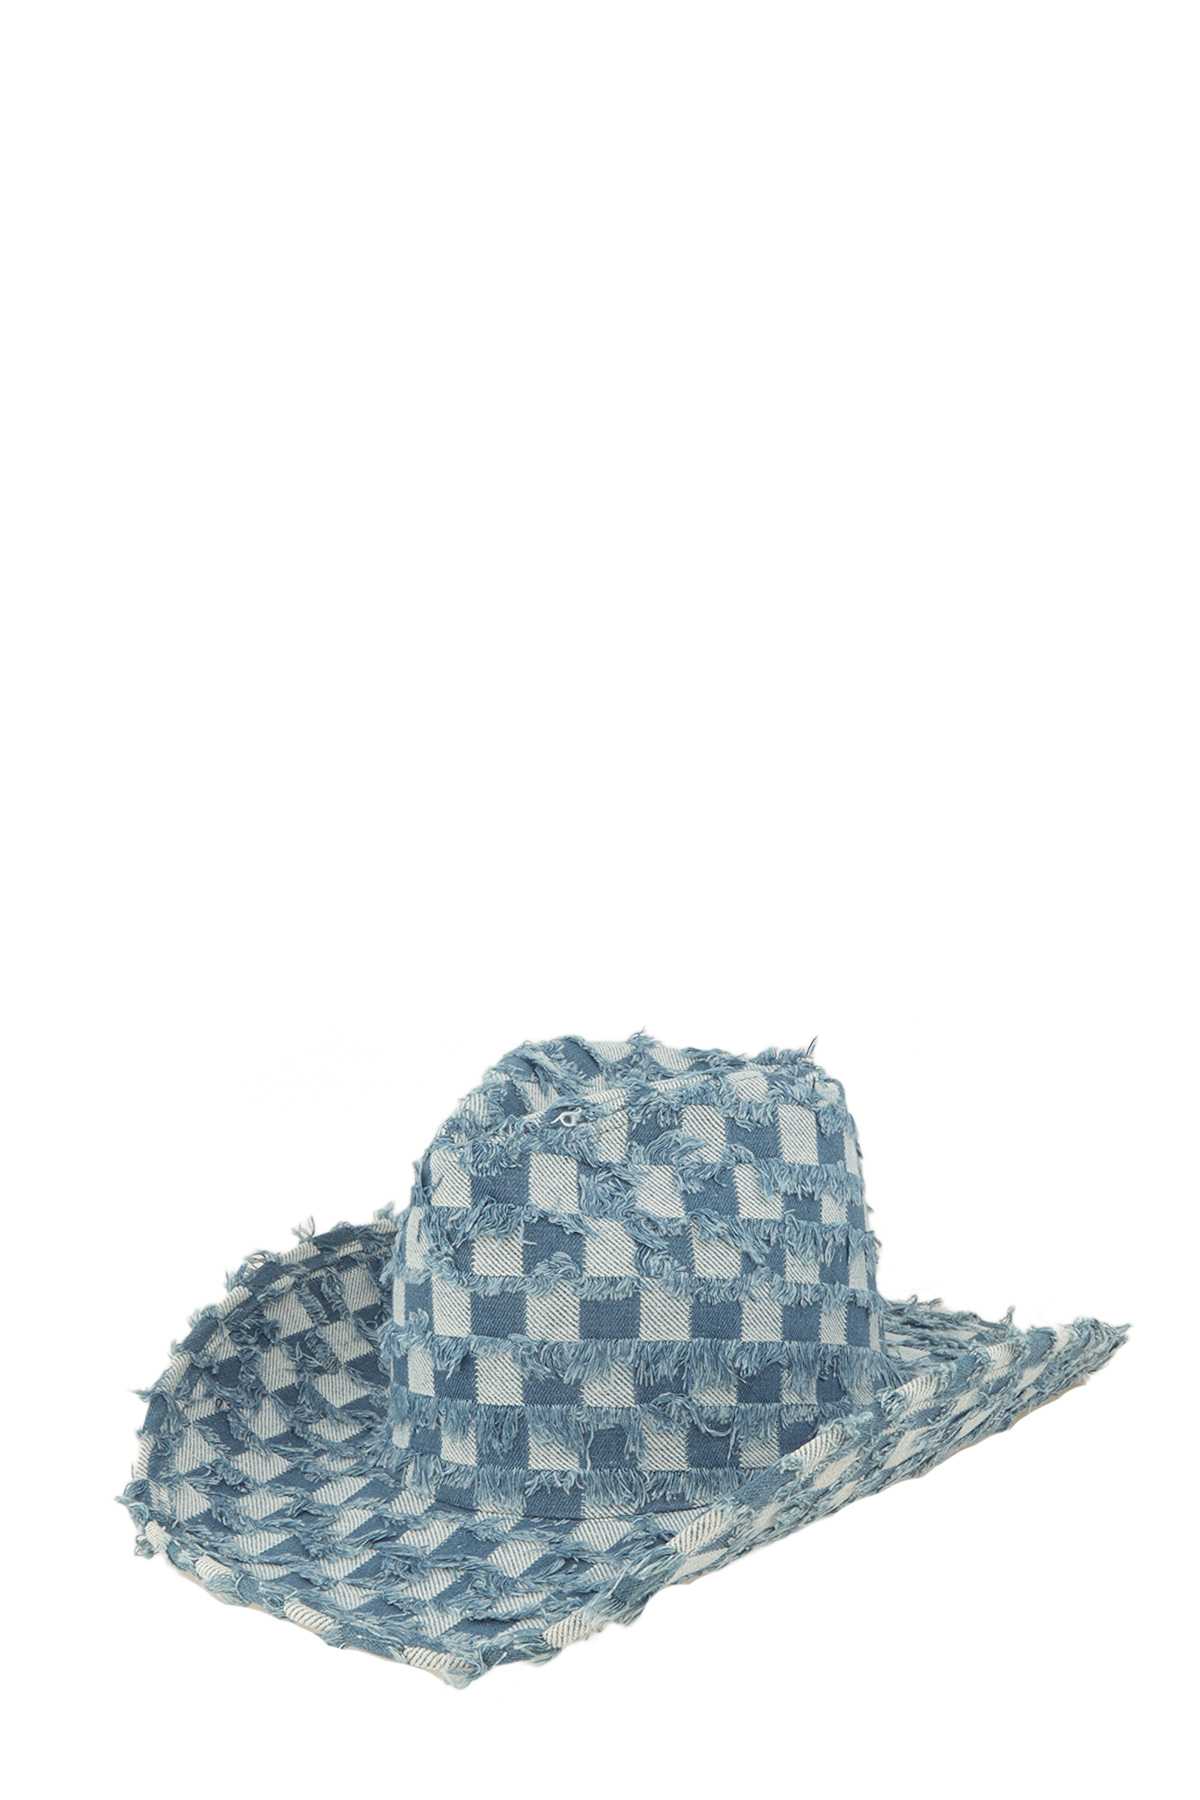 Checkered Fringe Denim Cowboy Hat